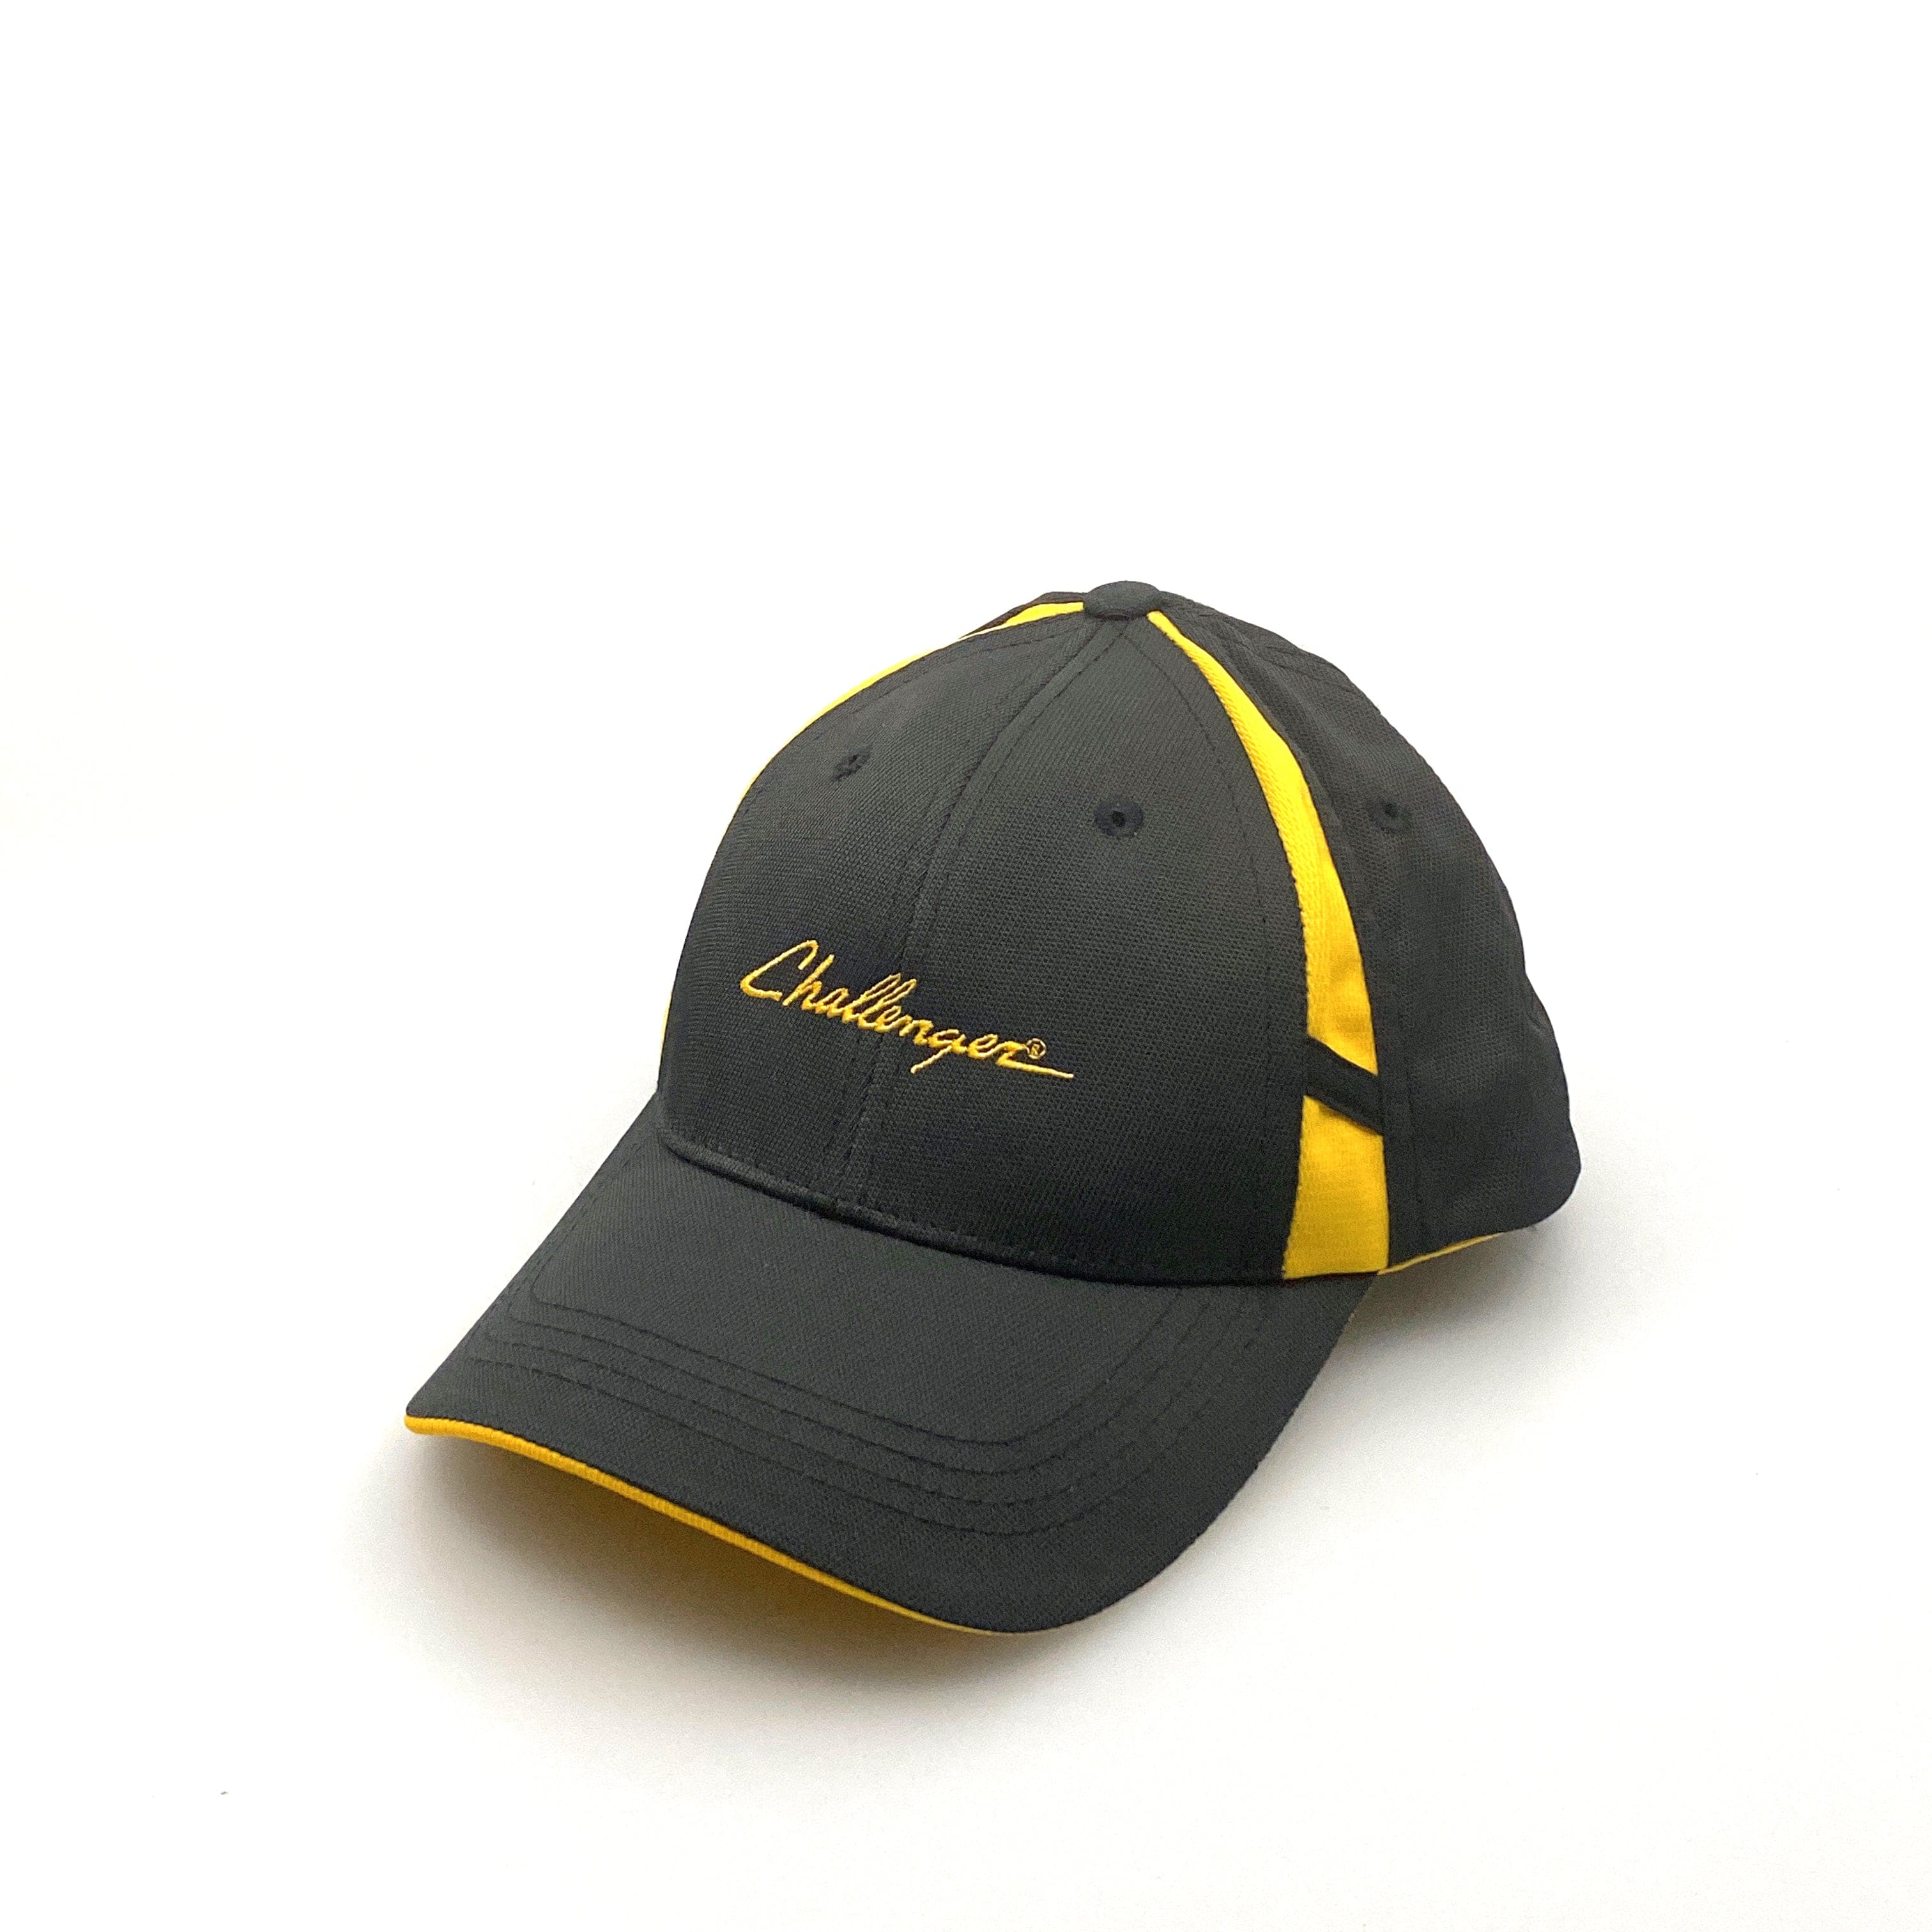 Port Authority “Challenger” Hat Adjustable Yellow Black Baseball